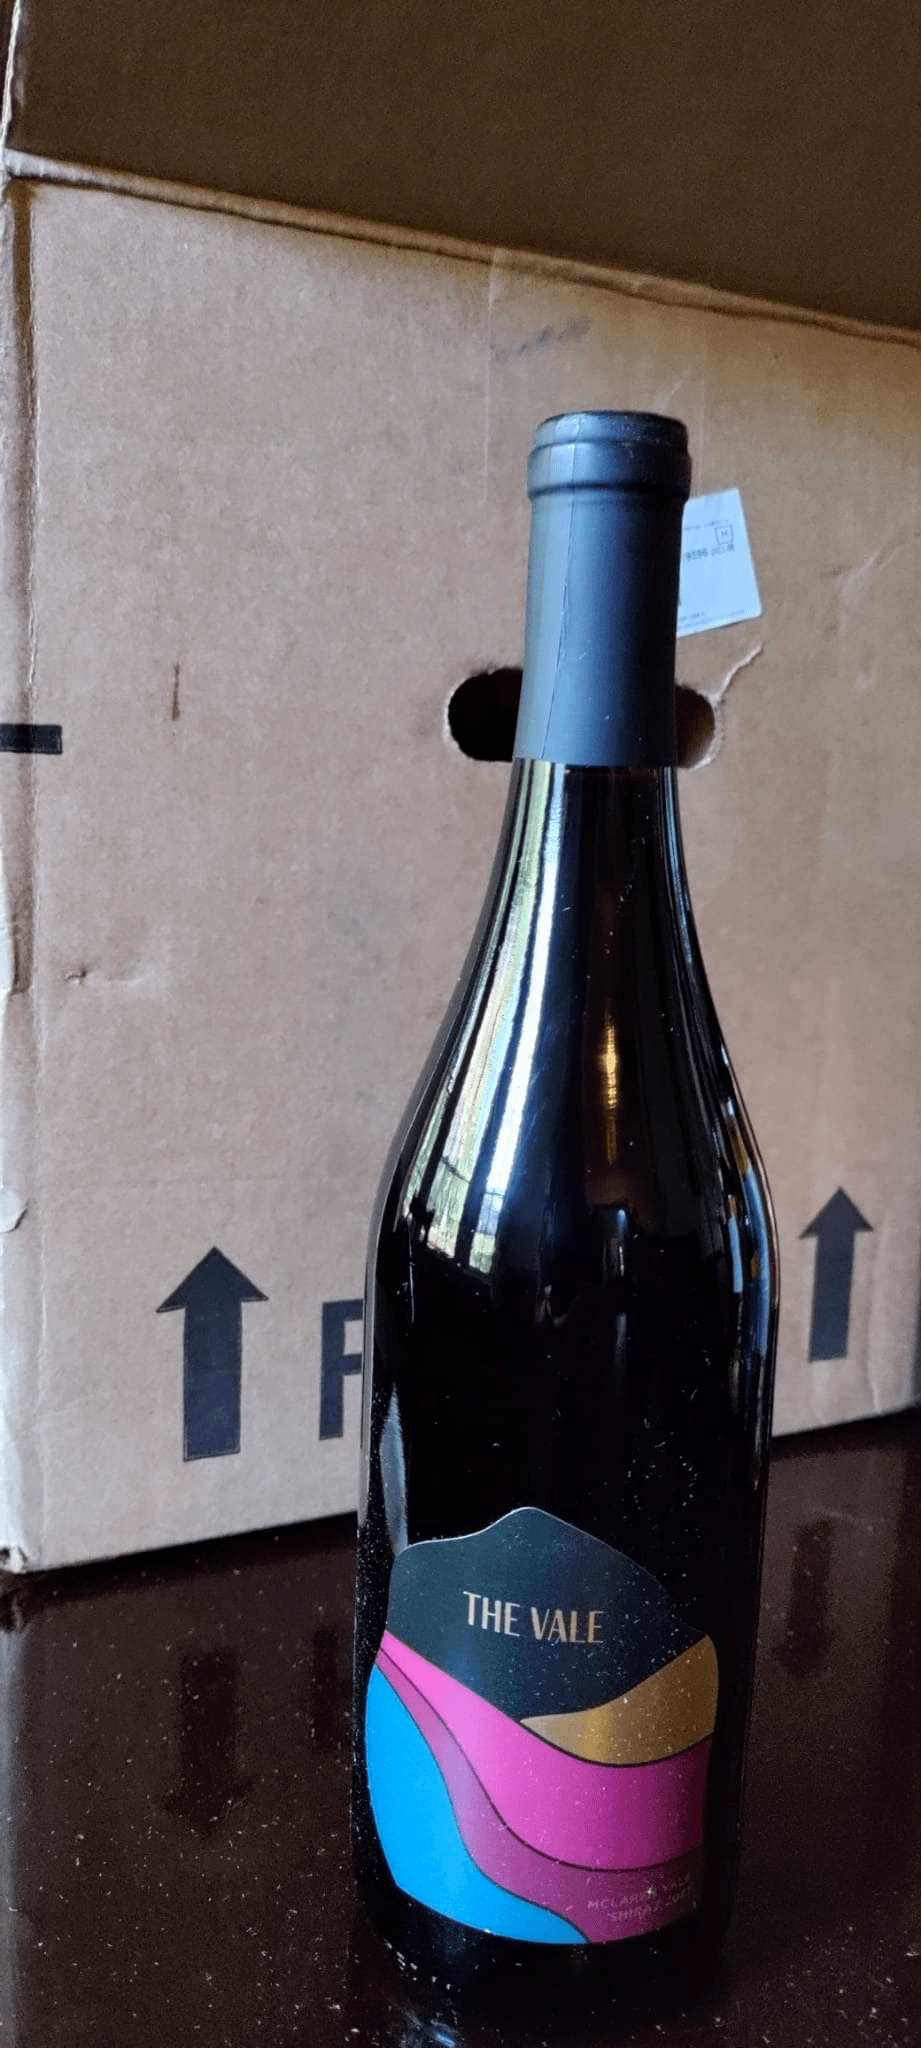 Bottle of The Vale, Shiraz.